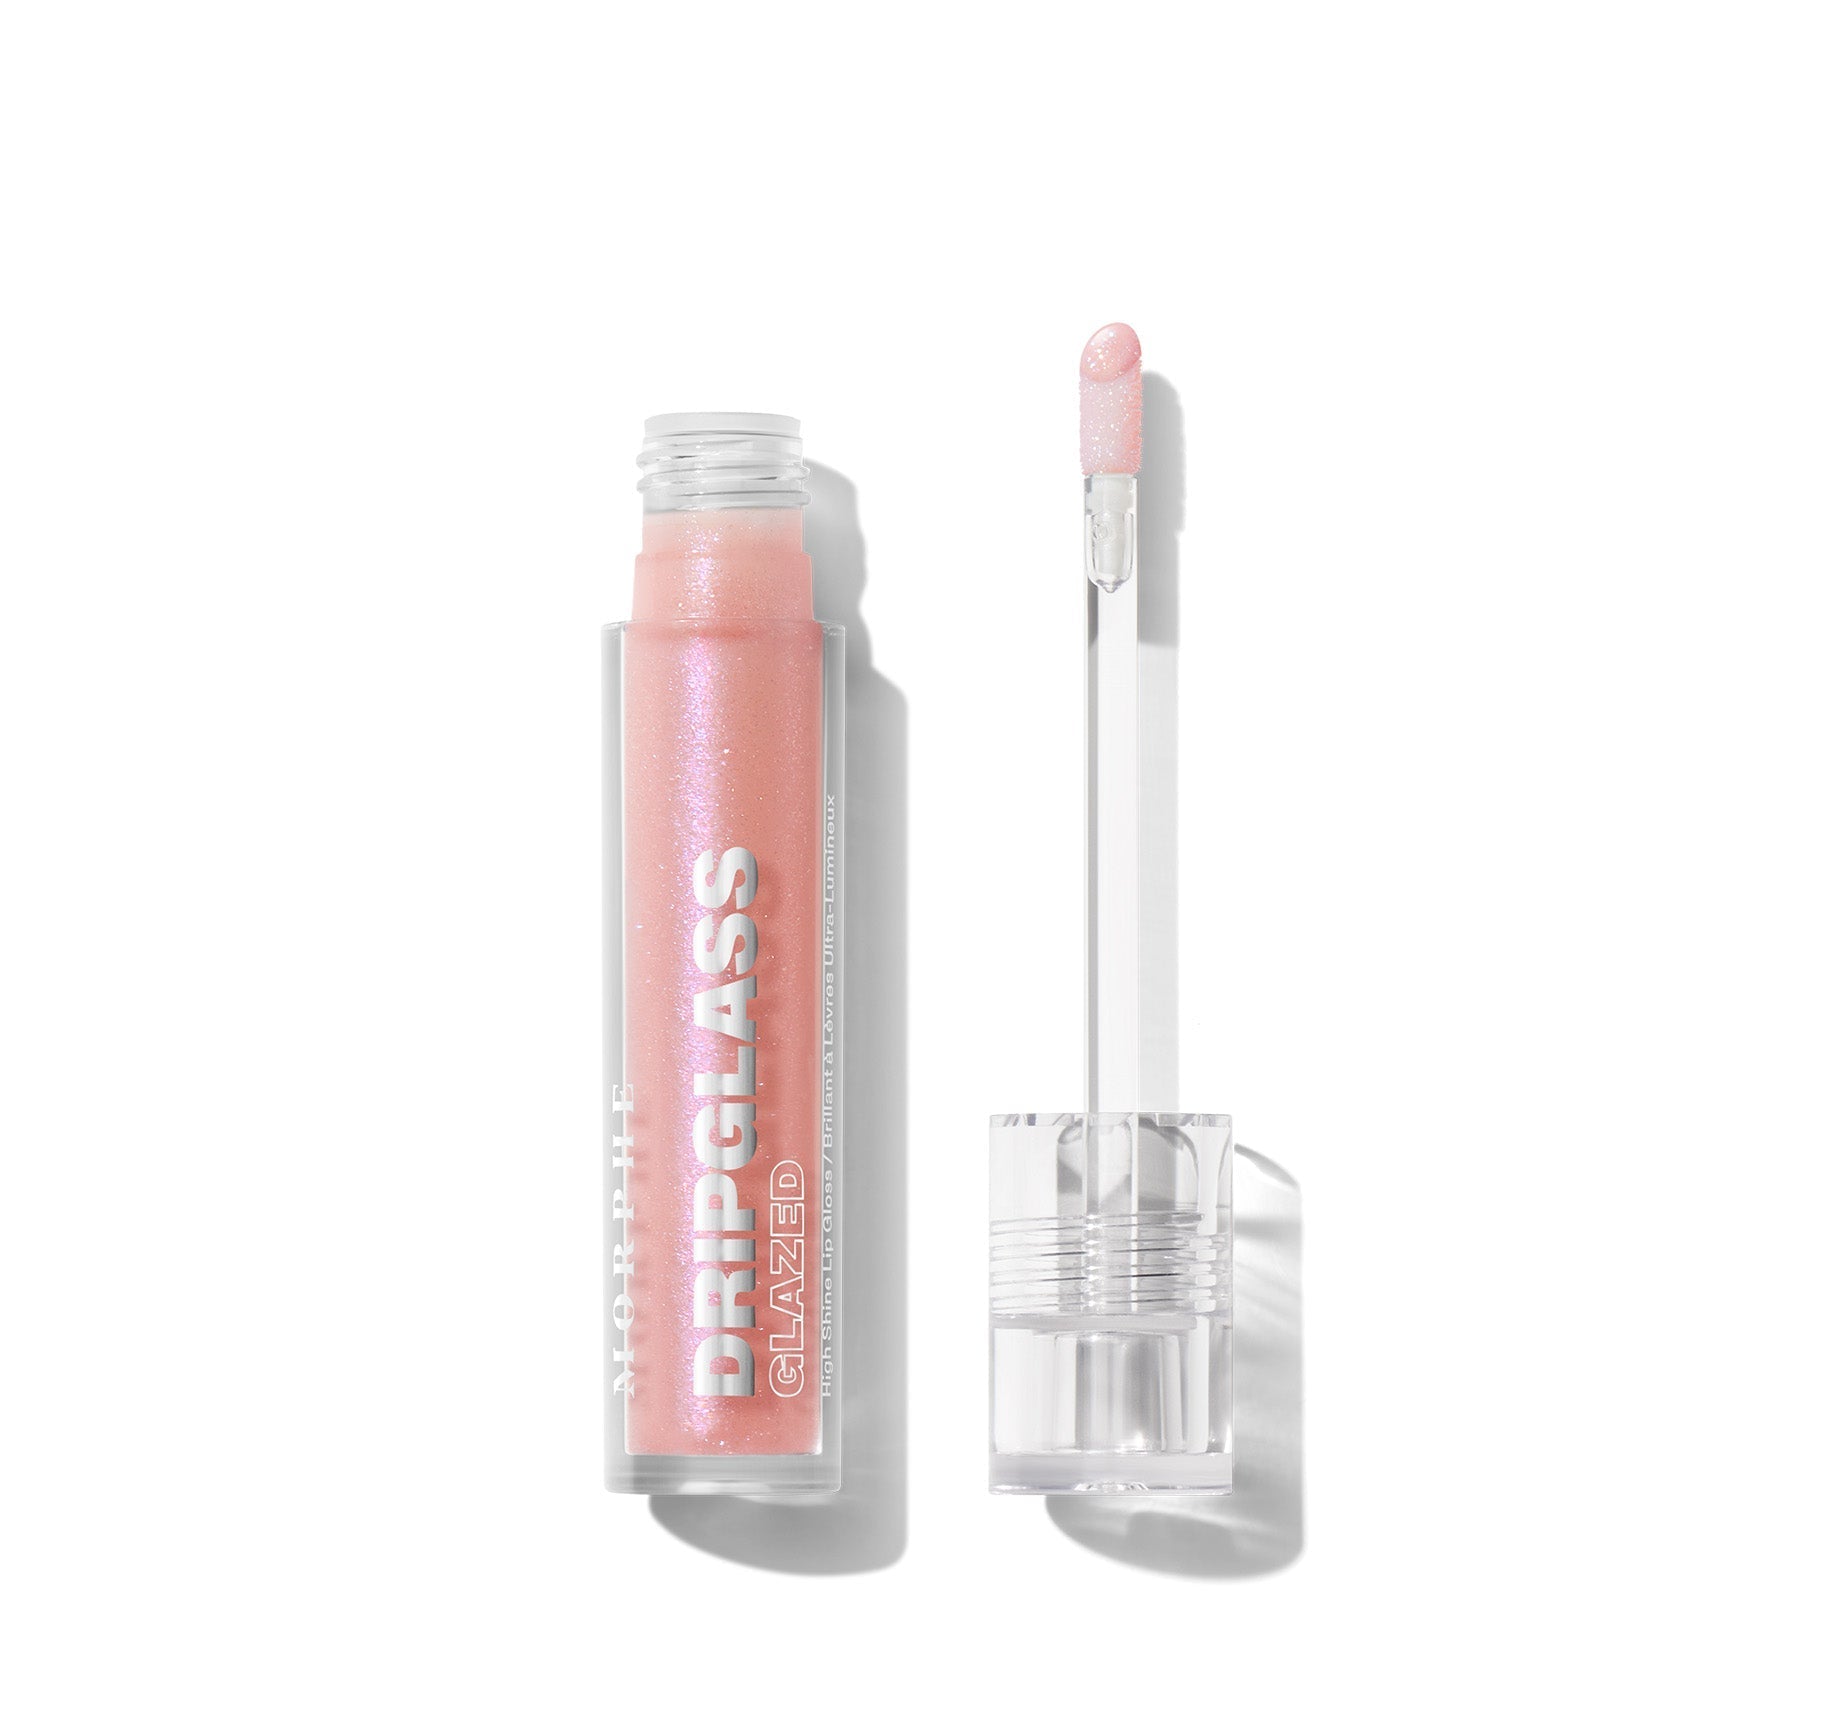 Aurascape Dripglass Glazed Highshine Pearlized Lip Gloss - Frose Bliss - Image 1